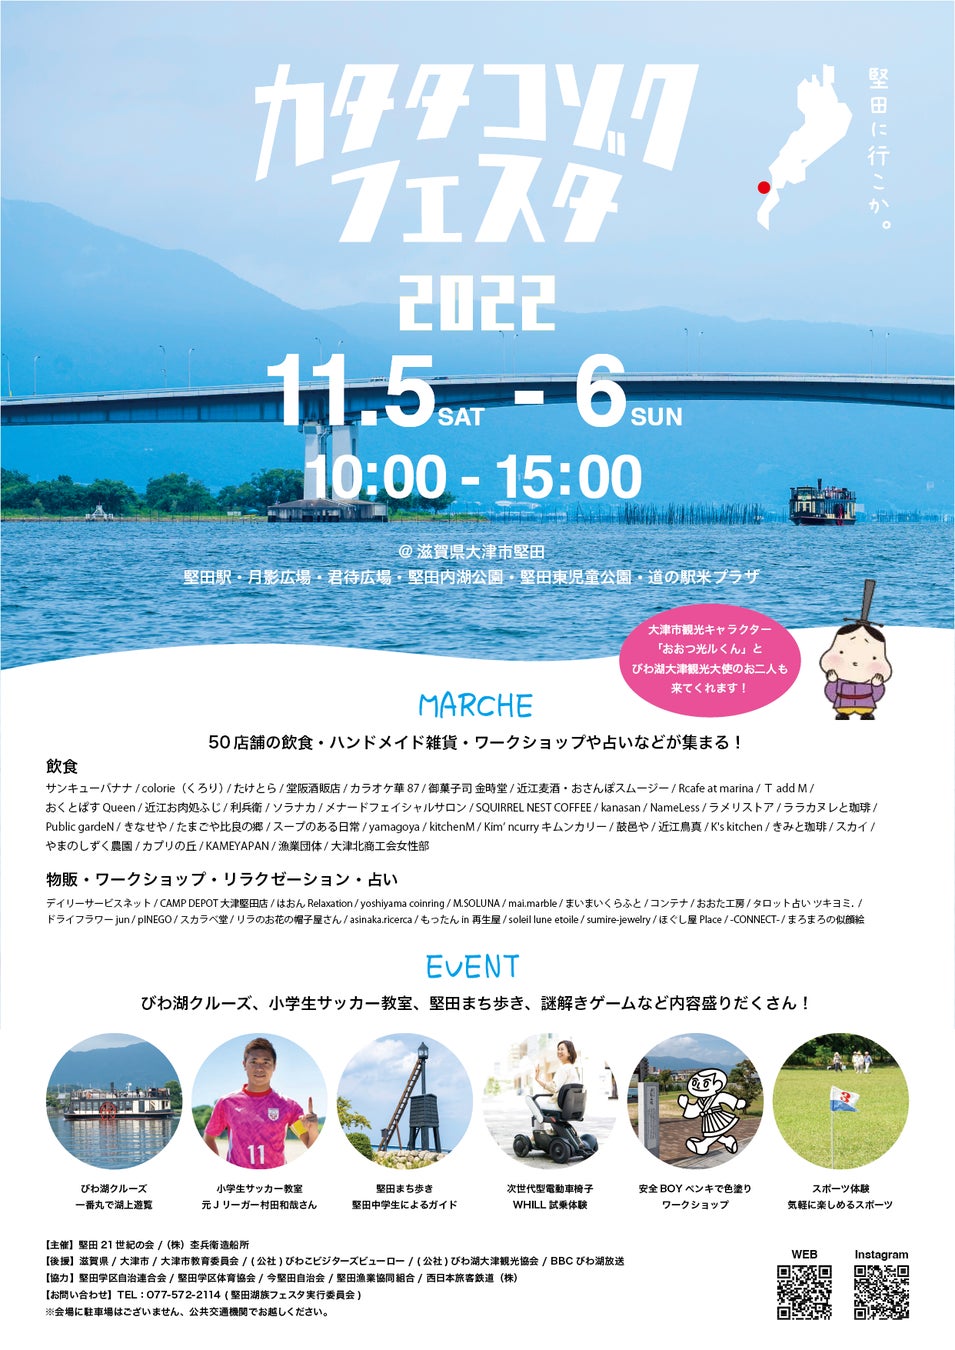 【JR西日本】「堅田湖族フェスタ」で鉄道に関連する体験イベントを開催！